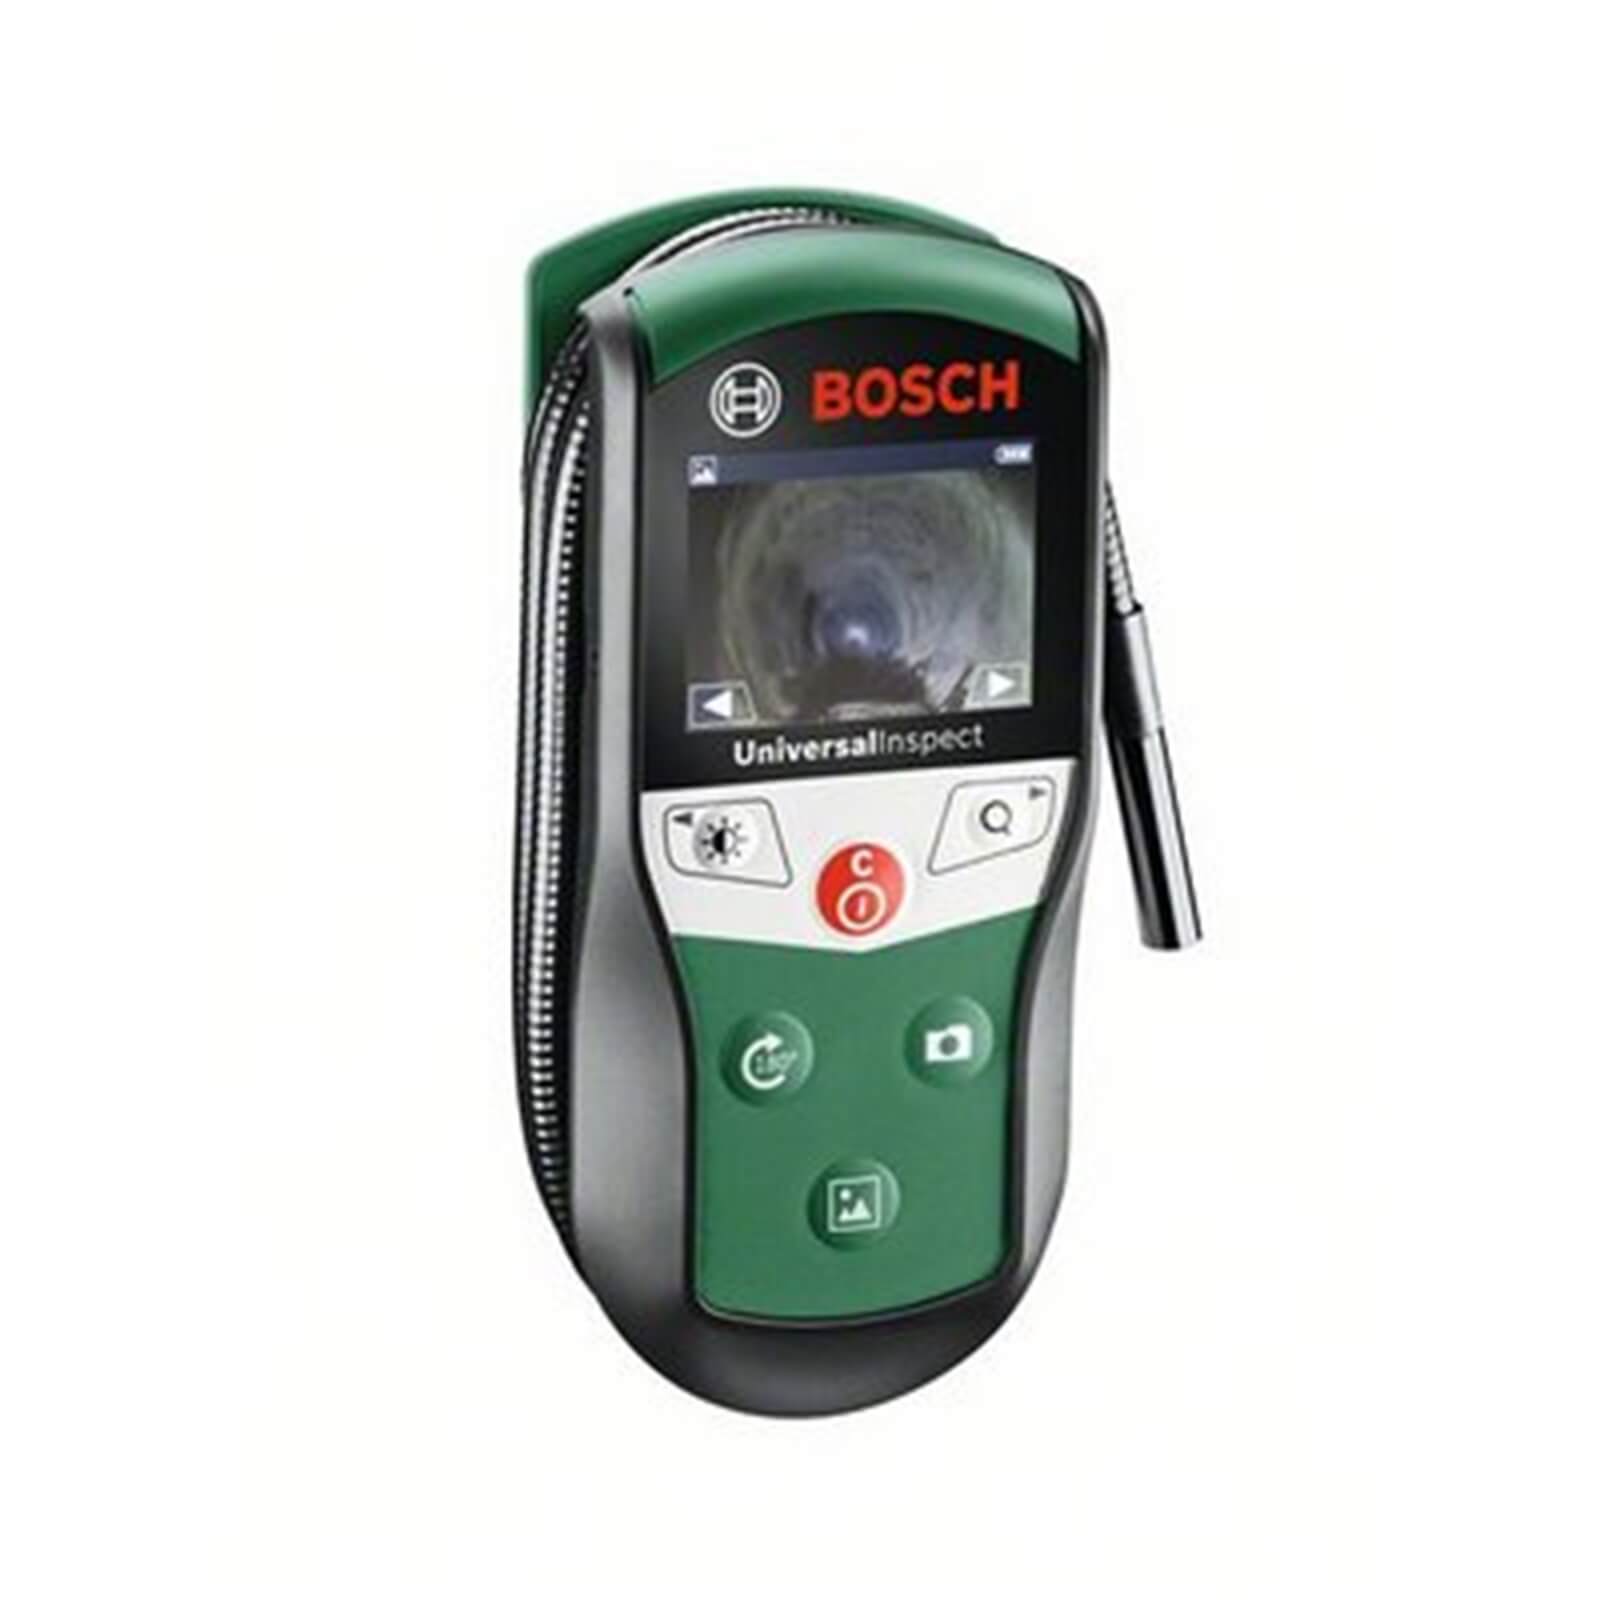 Bosch Universal Inspect Inspecting Tool